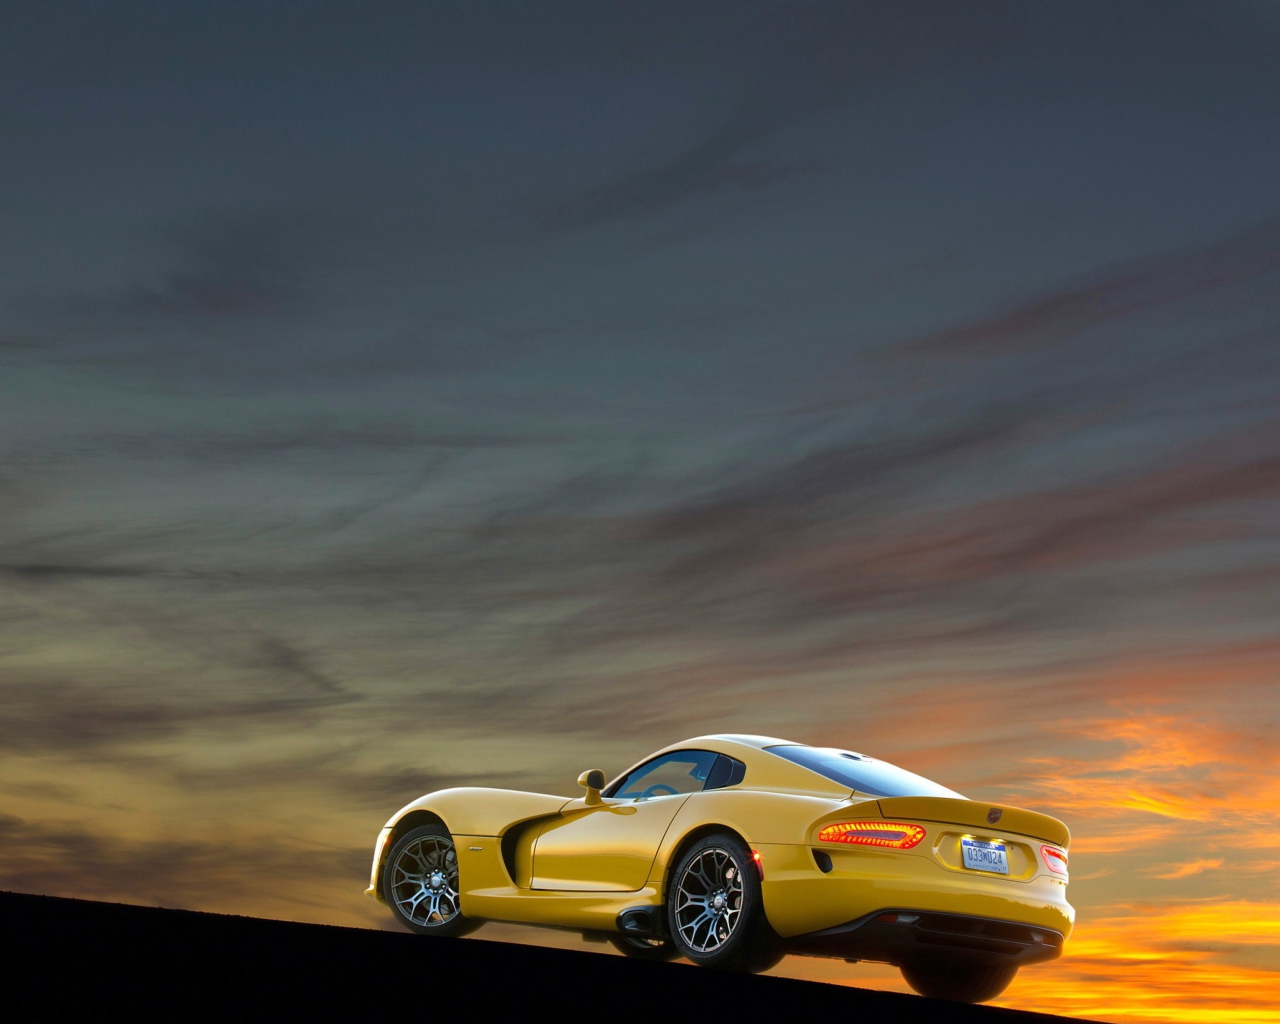 Das Yellow SRT Viper Rear Angle Wallpaper 1280x1024